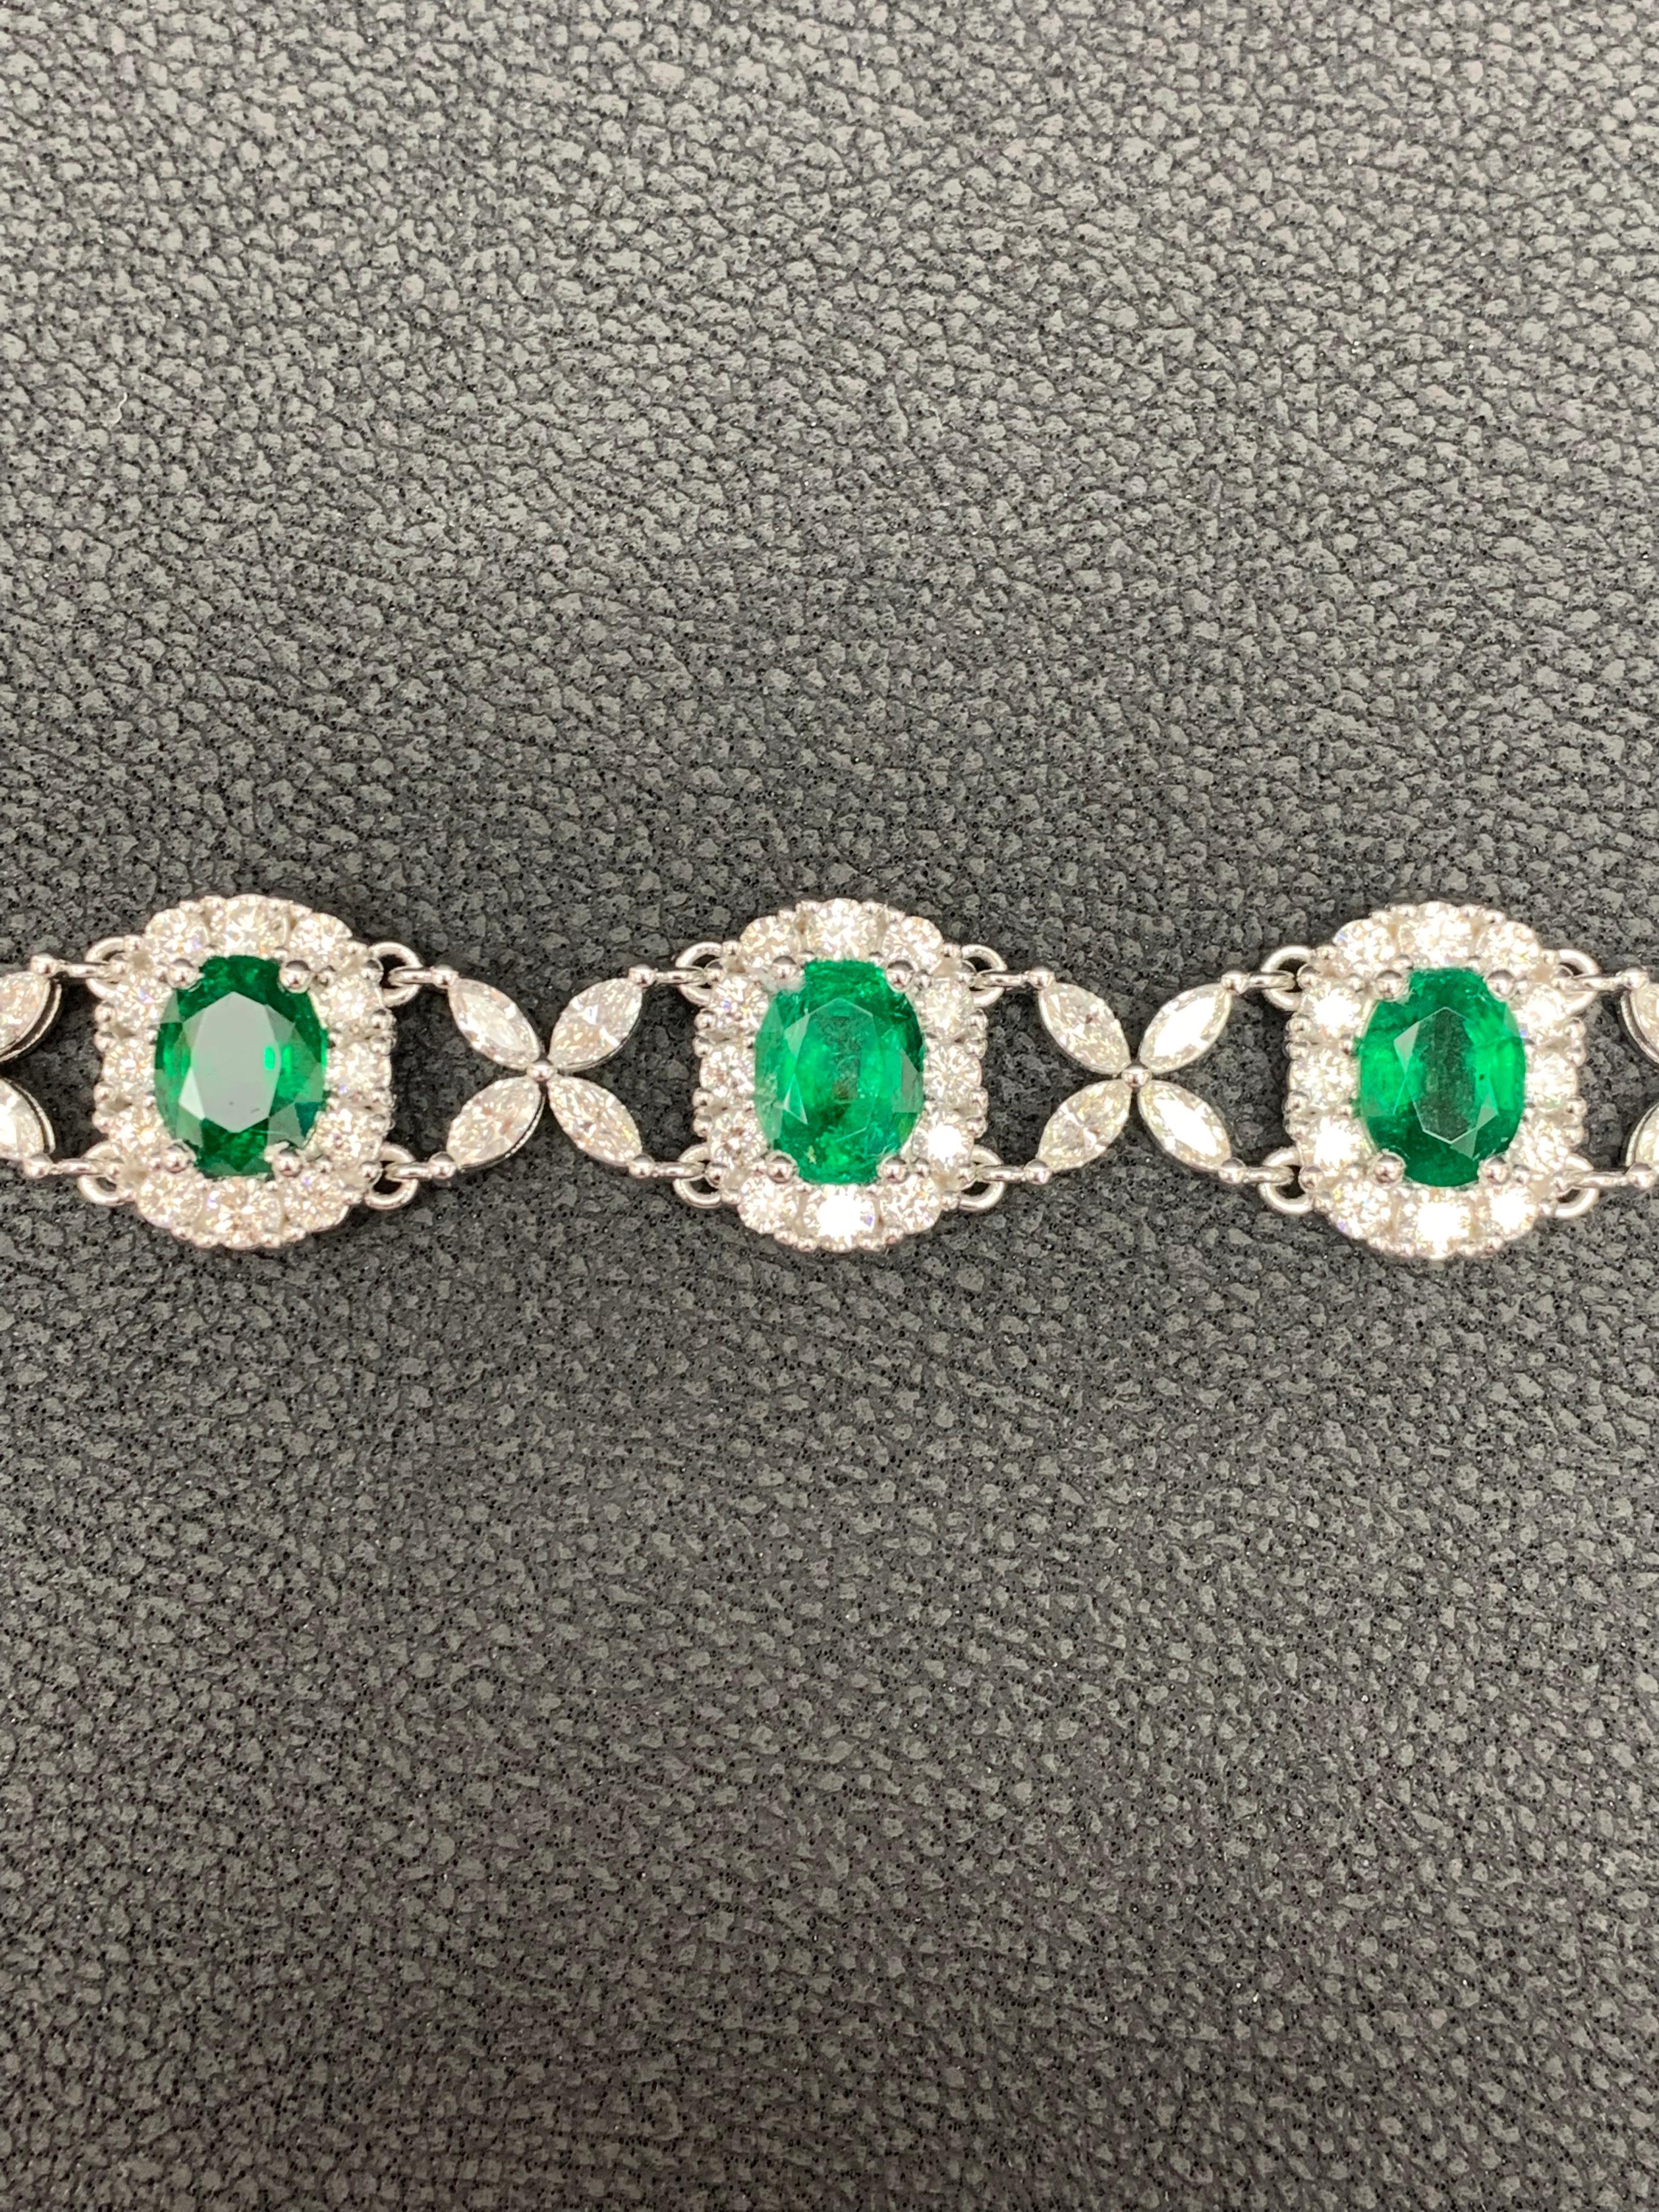 Women's 10.52 Carat Oval Cut Emerald and Diamond Tennis Bracelet in 14K White Gold For Sale